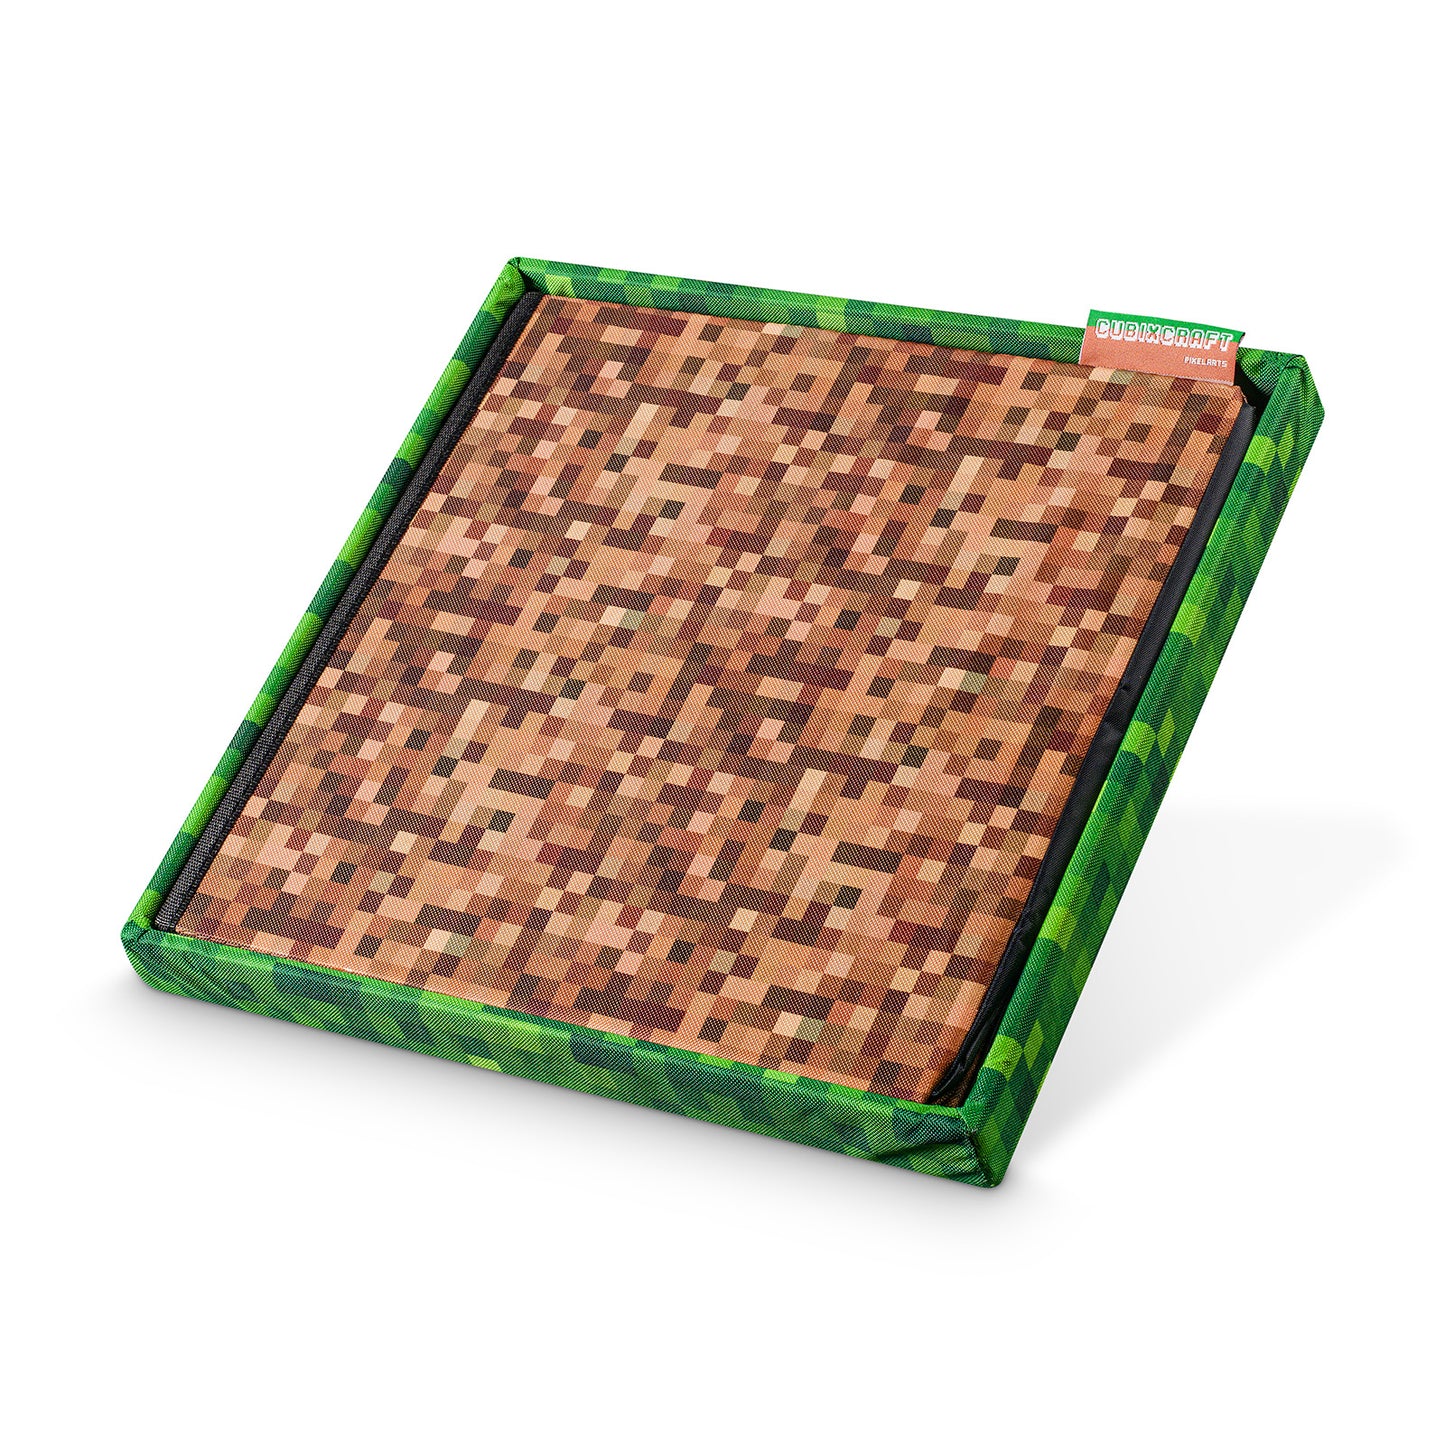 Seat cube box in pixel design"grassy soil"